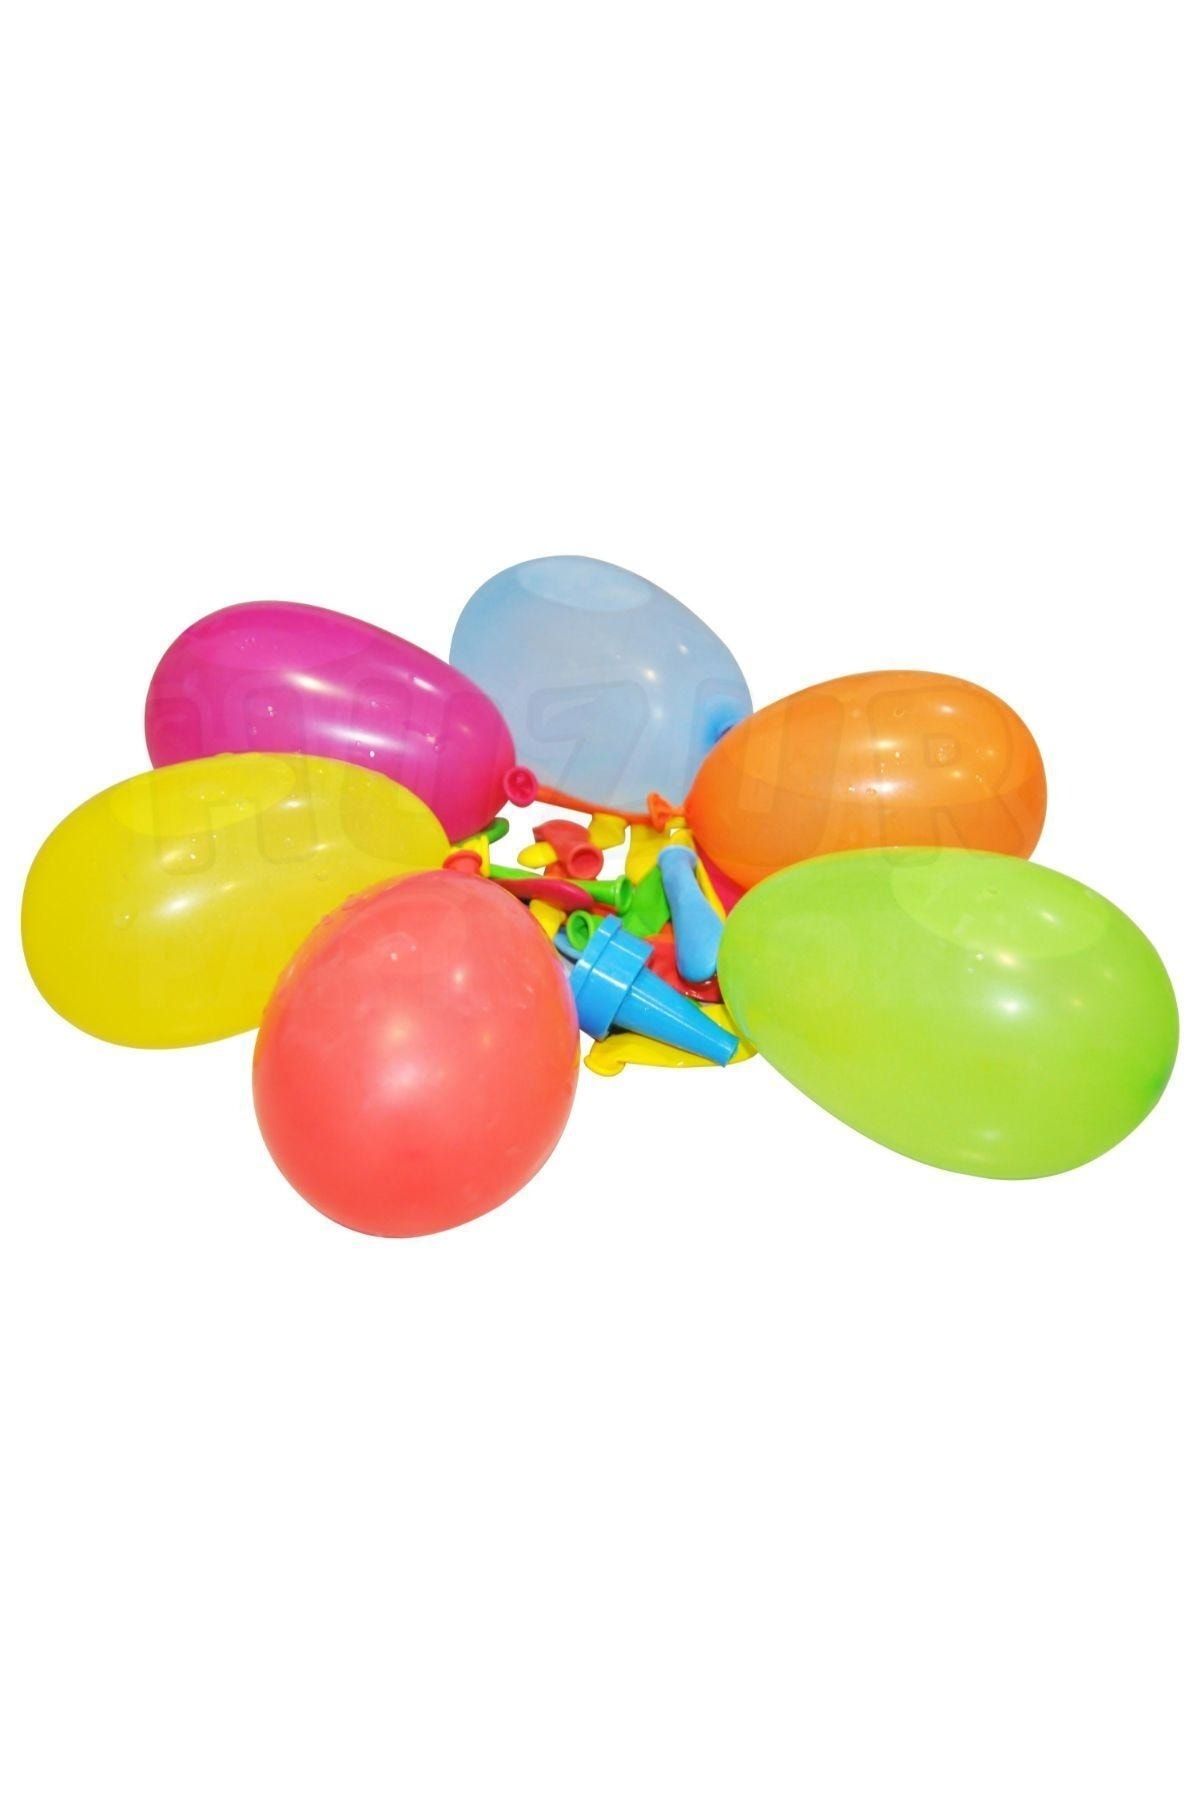 Huzur Party Store Su Balonu 50 Adet 10 Cm Renk Renk Su Topu Su Savaşı Balonu Balon Bombası Küçük Su Doldurulan Balon